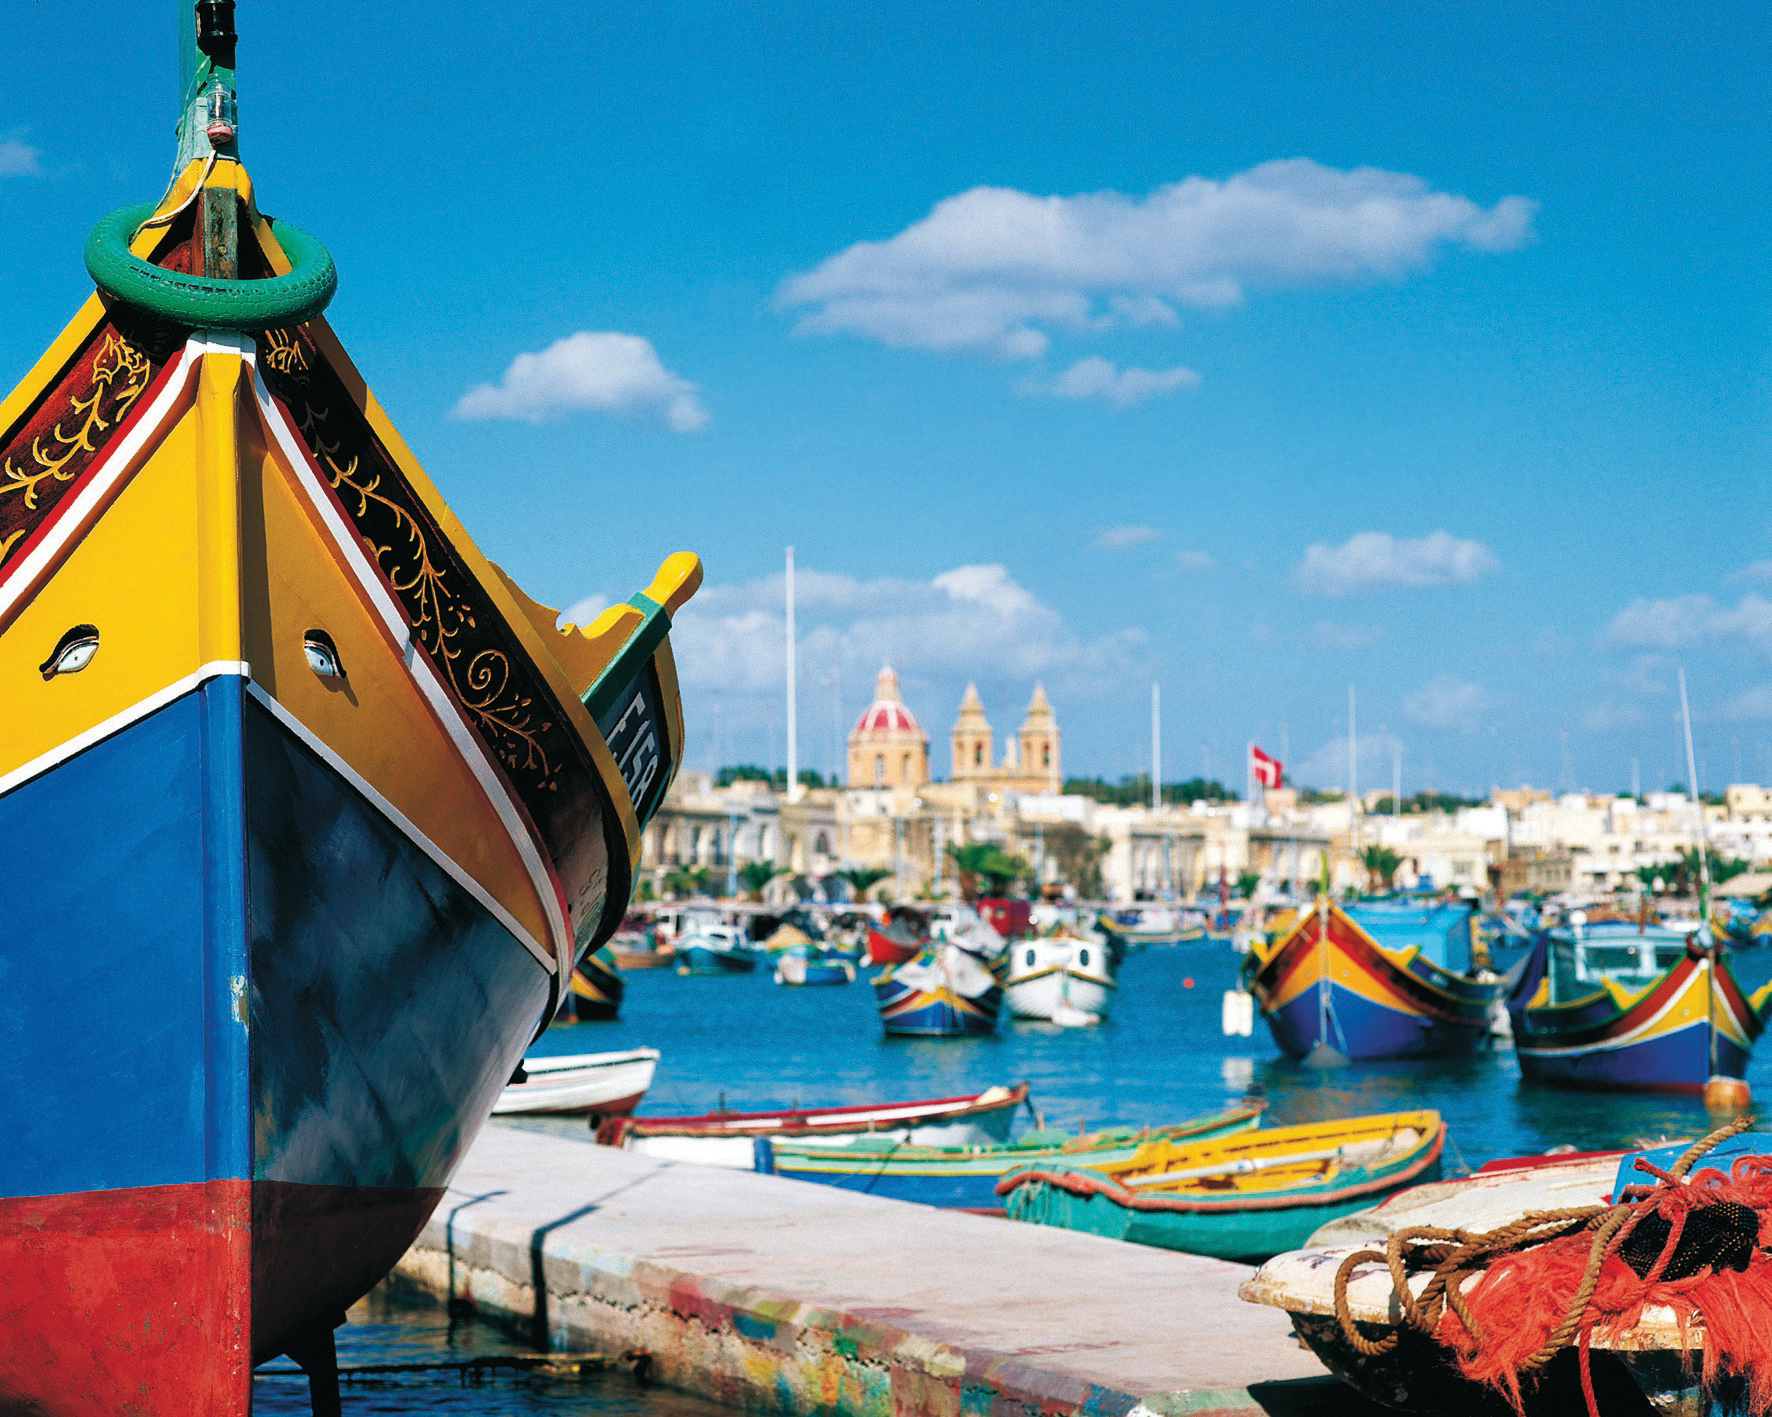 tourhub | Exodus | Walking on Gozo - Calypso's Isle Short Break | W04GO